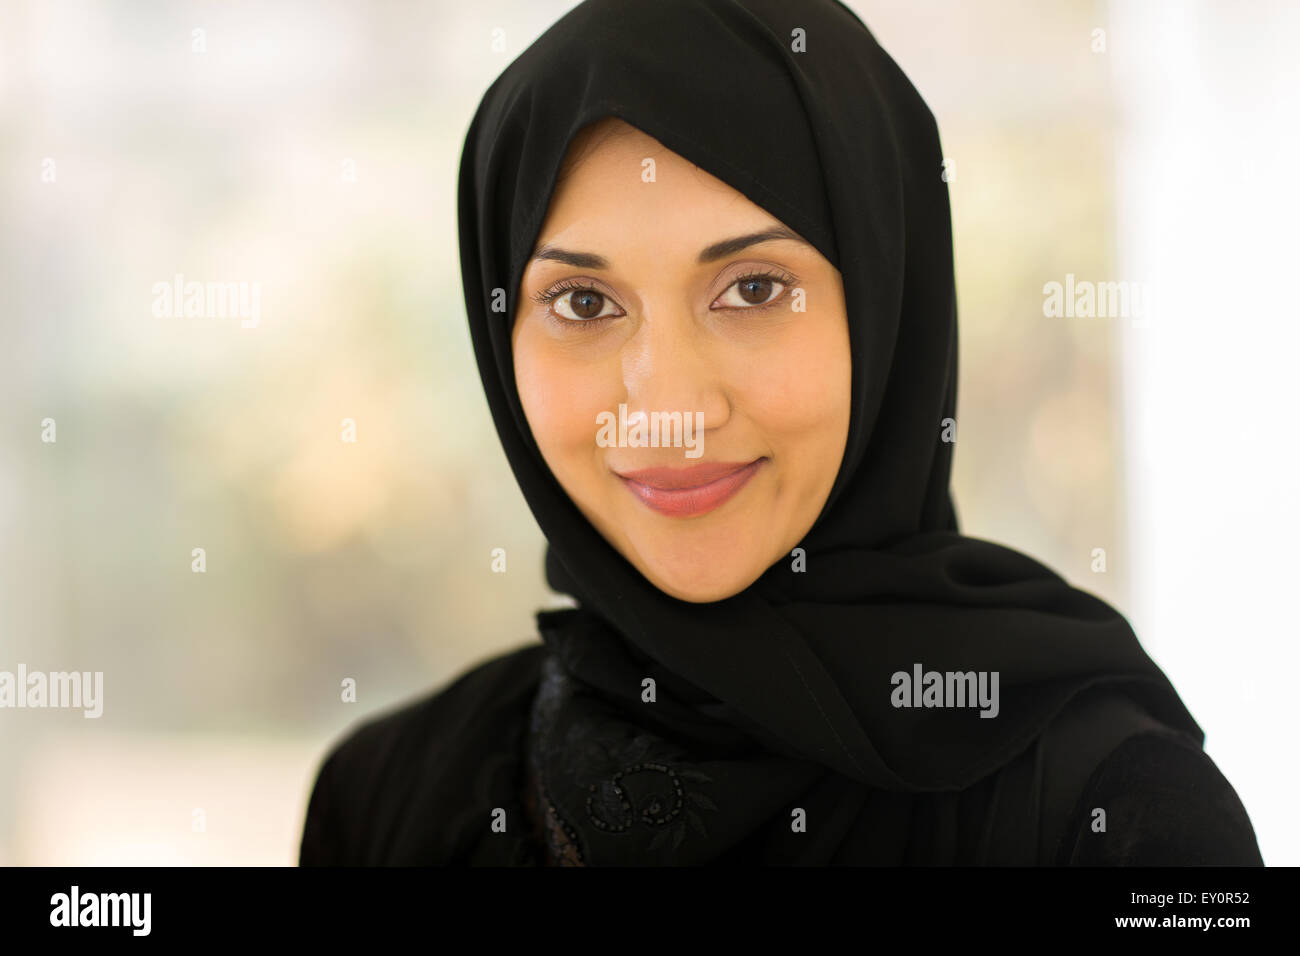 young Muslim woman looking at the camera Stock Photo